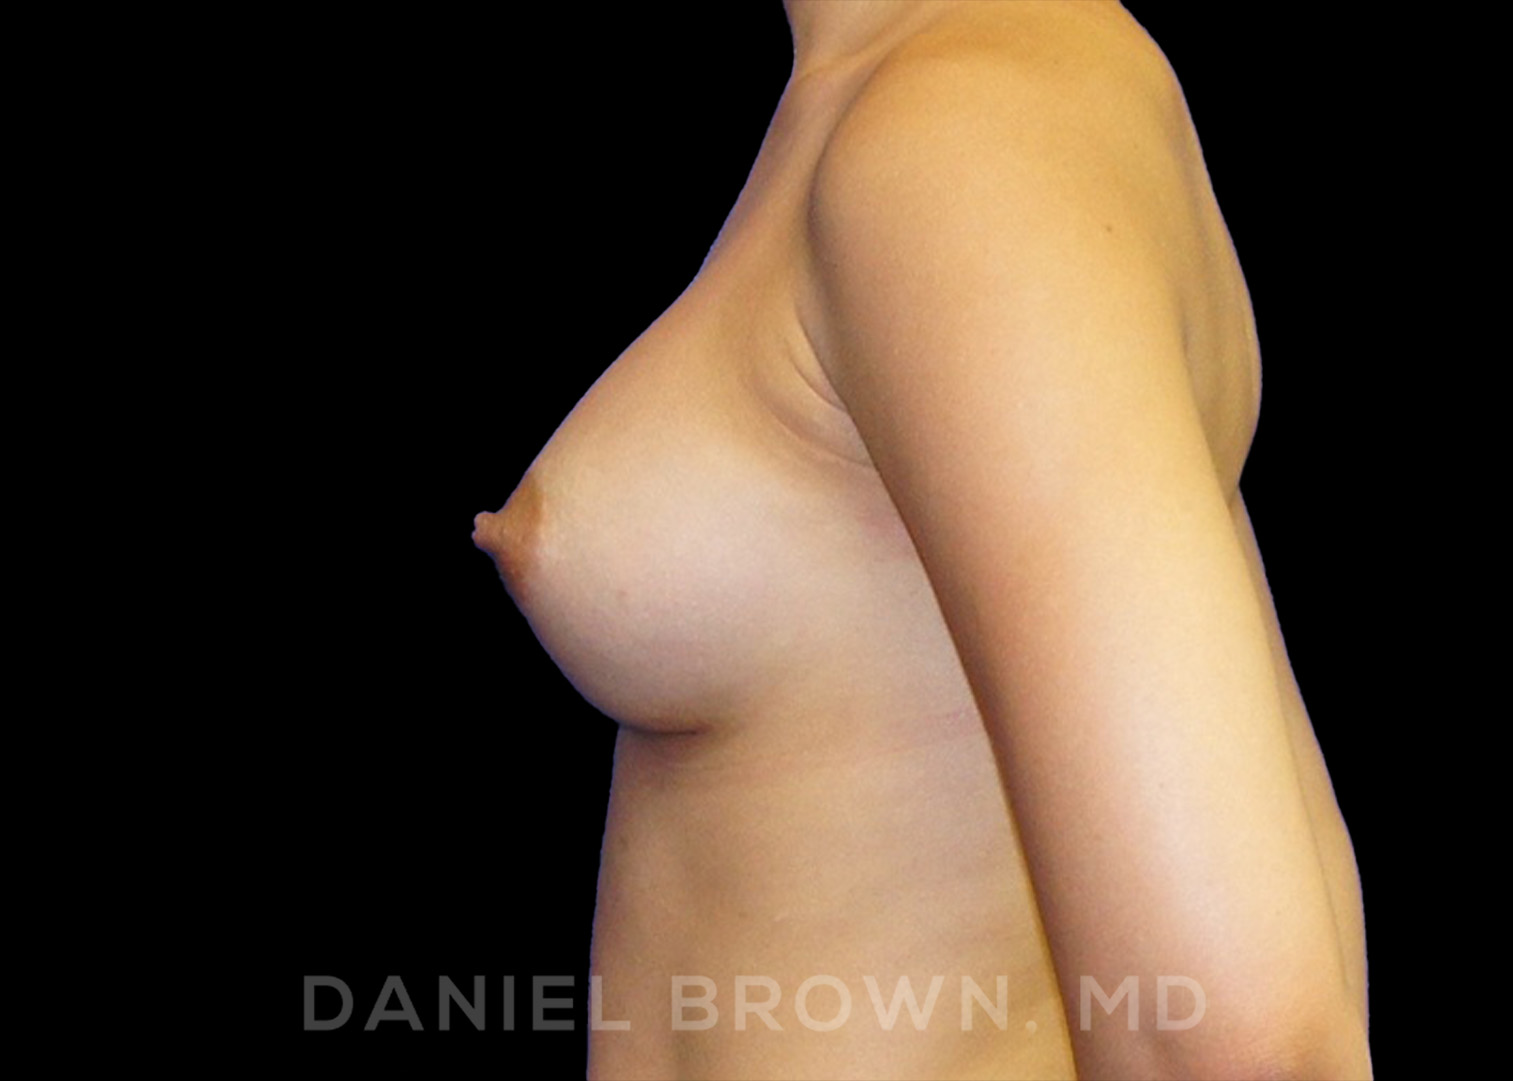 Breast Augmentation Patient Photo - Case 2431 - after view